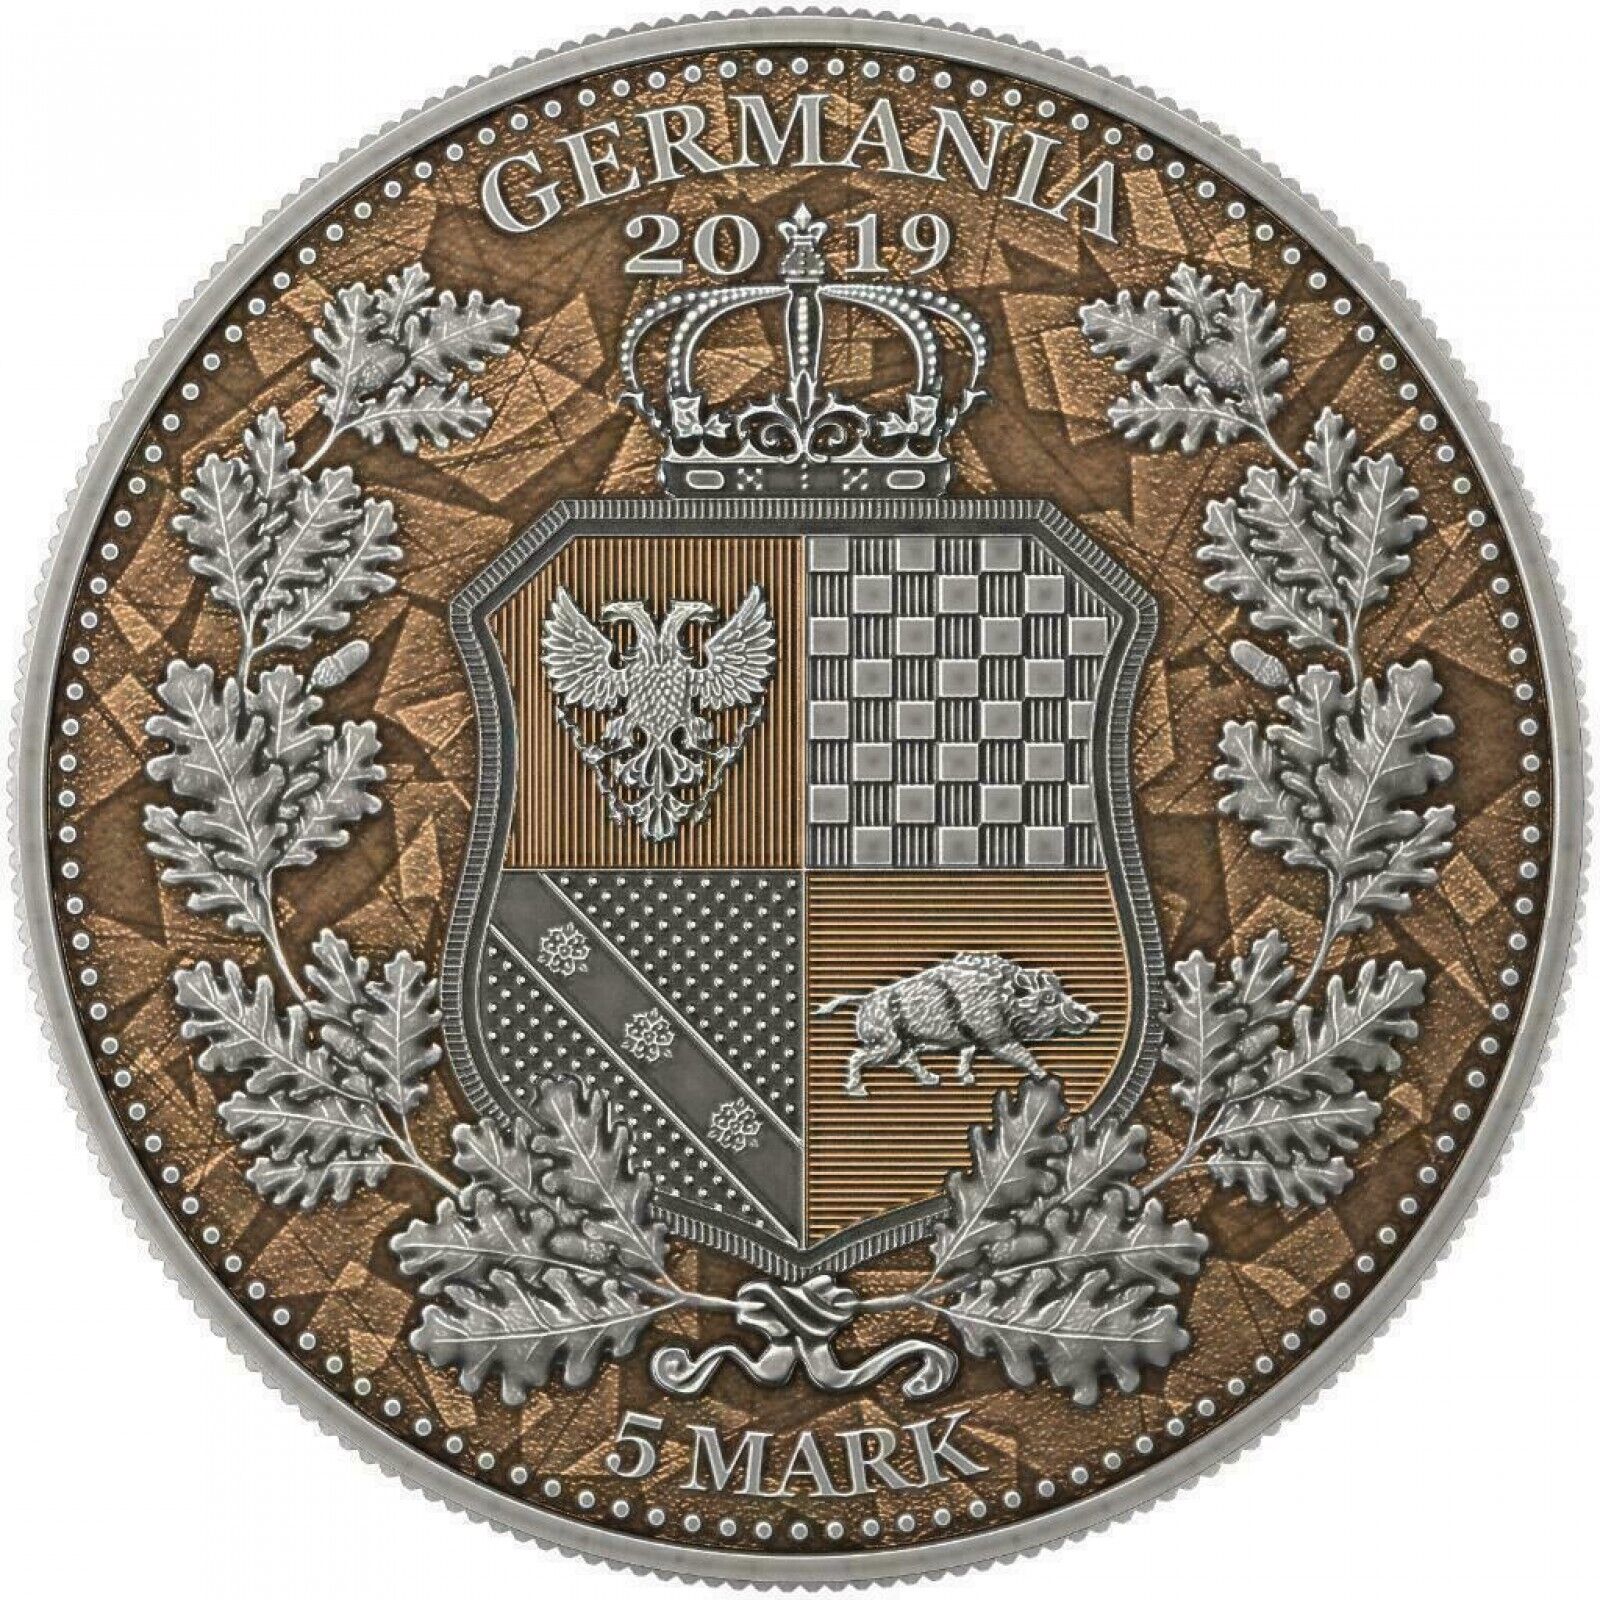 1 Oz Silver Coin 2019 5 Mark Columbia & Germania Allegories - Antique Copper-classypw.com-2